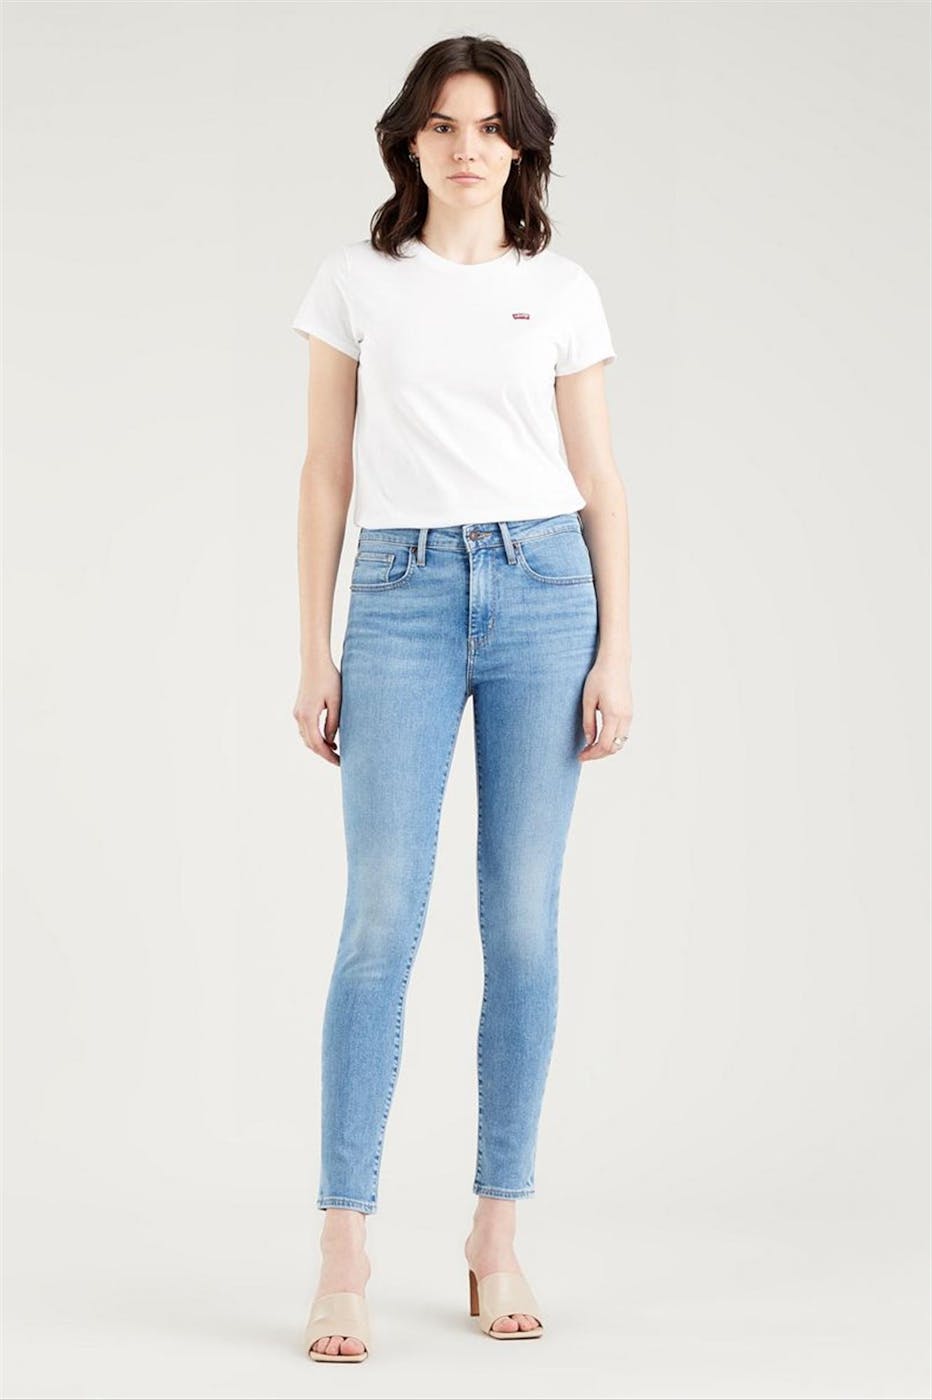 Levi's - Blauwe 721 Skinny jeans